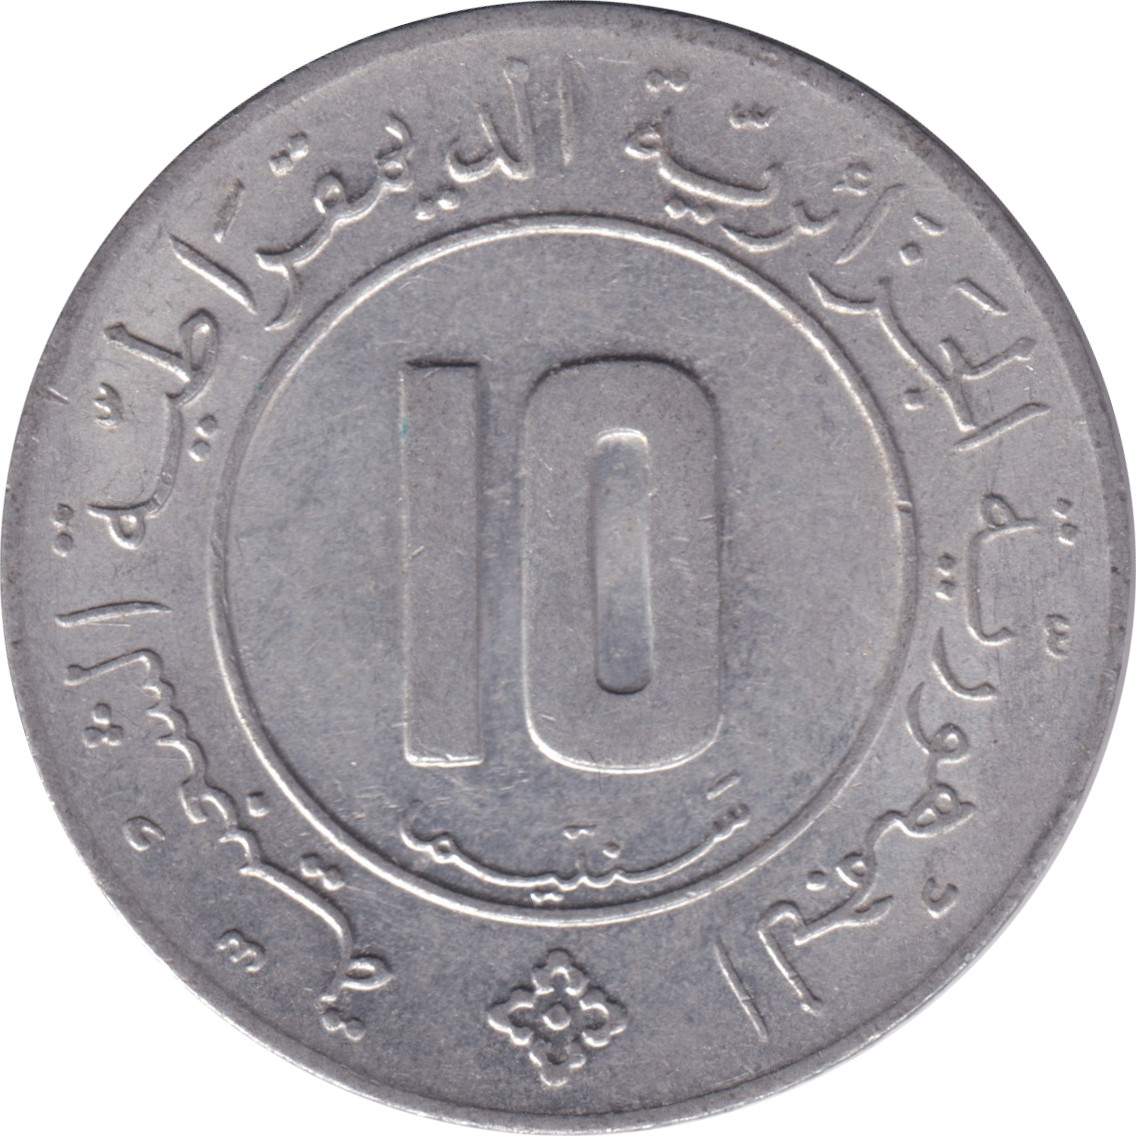 10 centimes - Palm tree